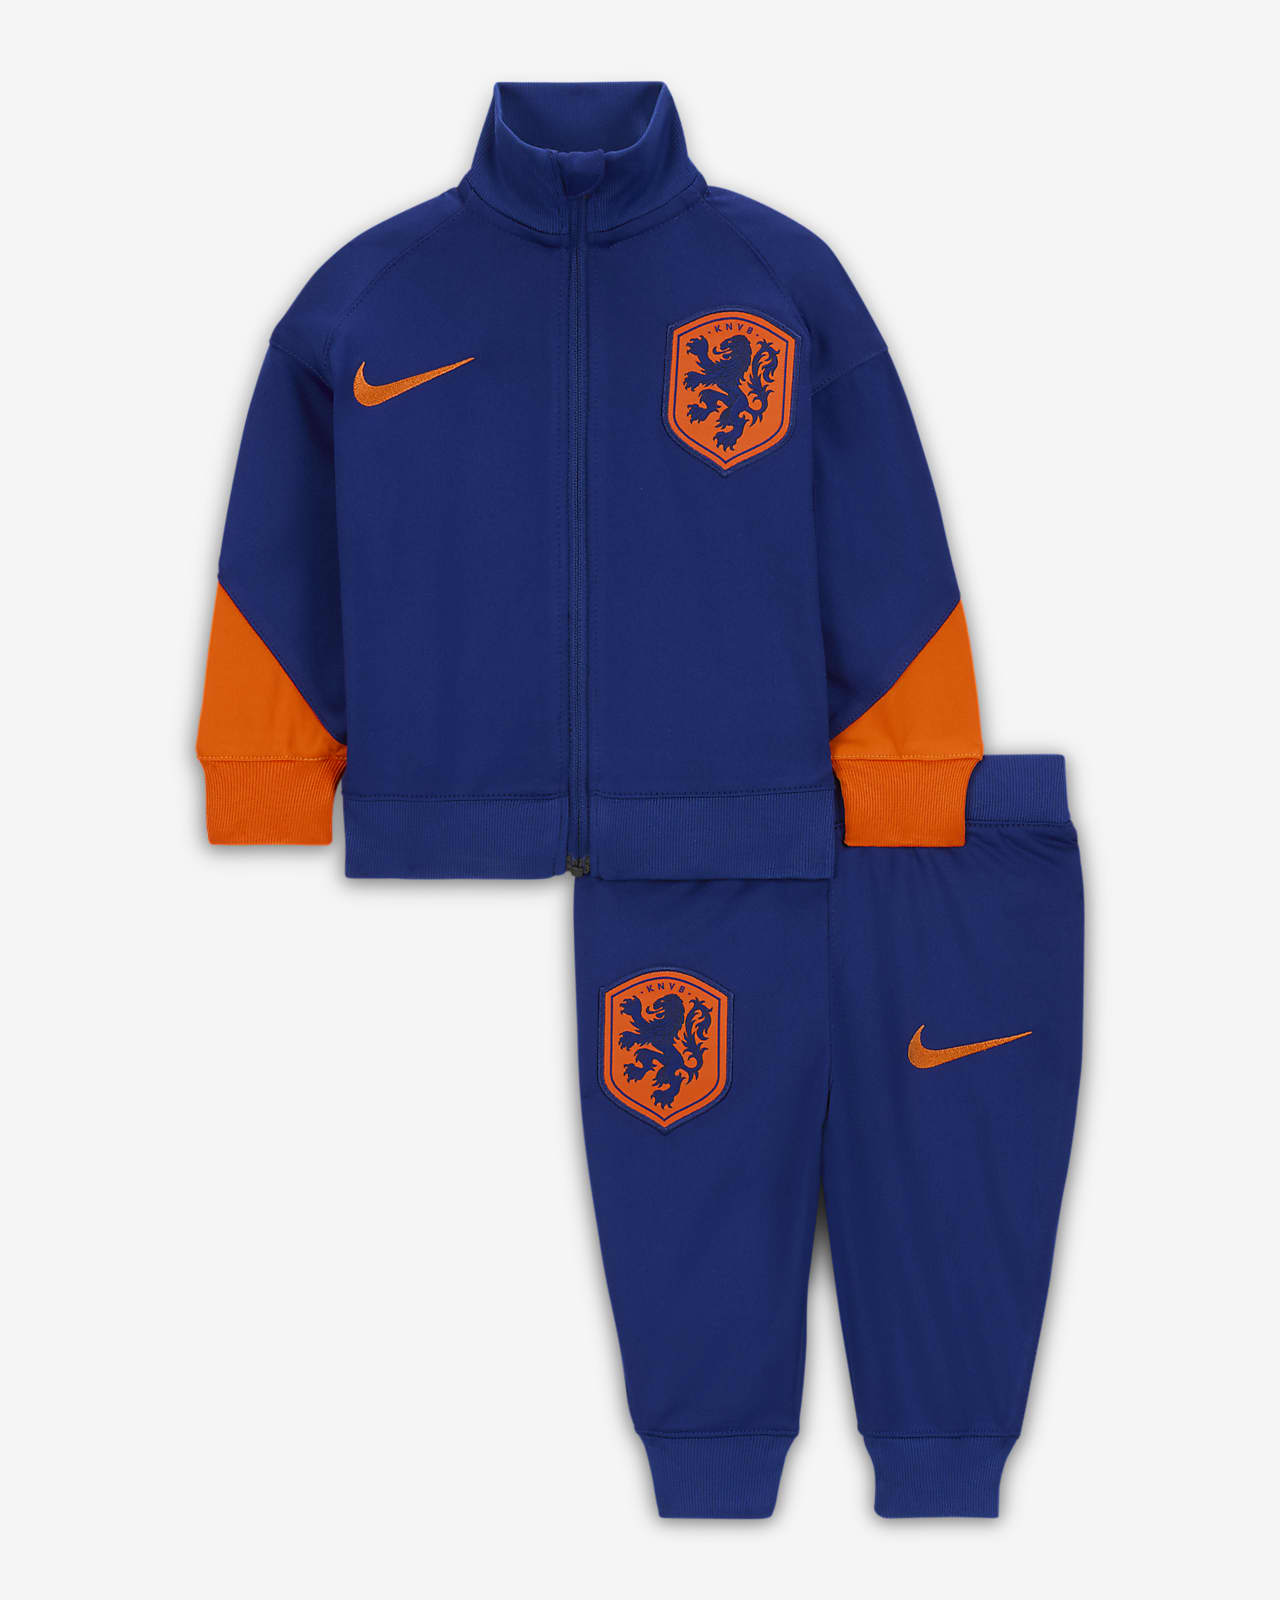 Nederland Strike Nike Dri-FIT knit voetbaltrainingspak voor baby's/peuters